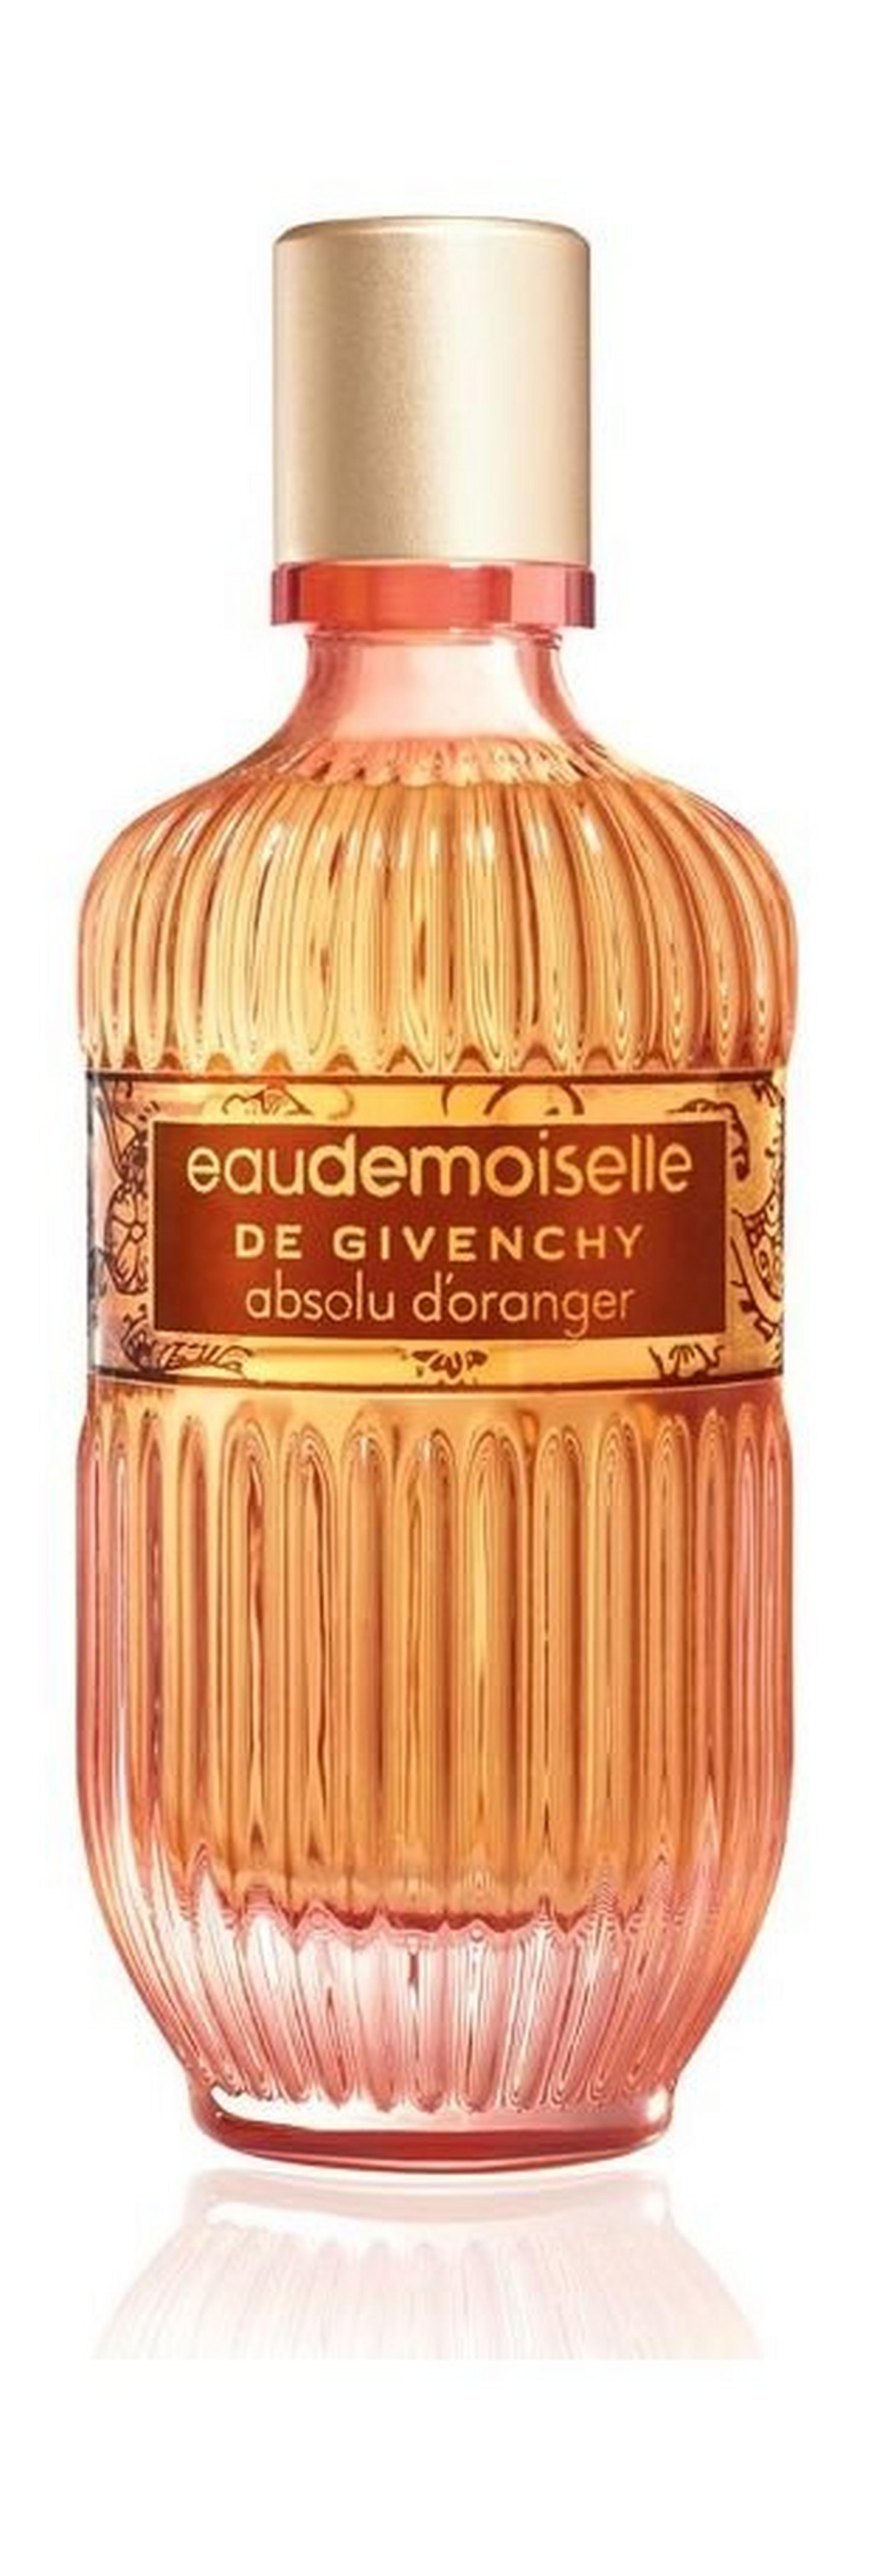 Givenchy Eau Demoiselle Absolu D'Oranger For Women 100ml - EDP